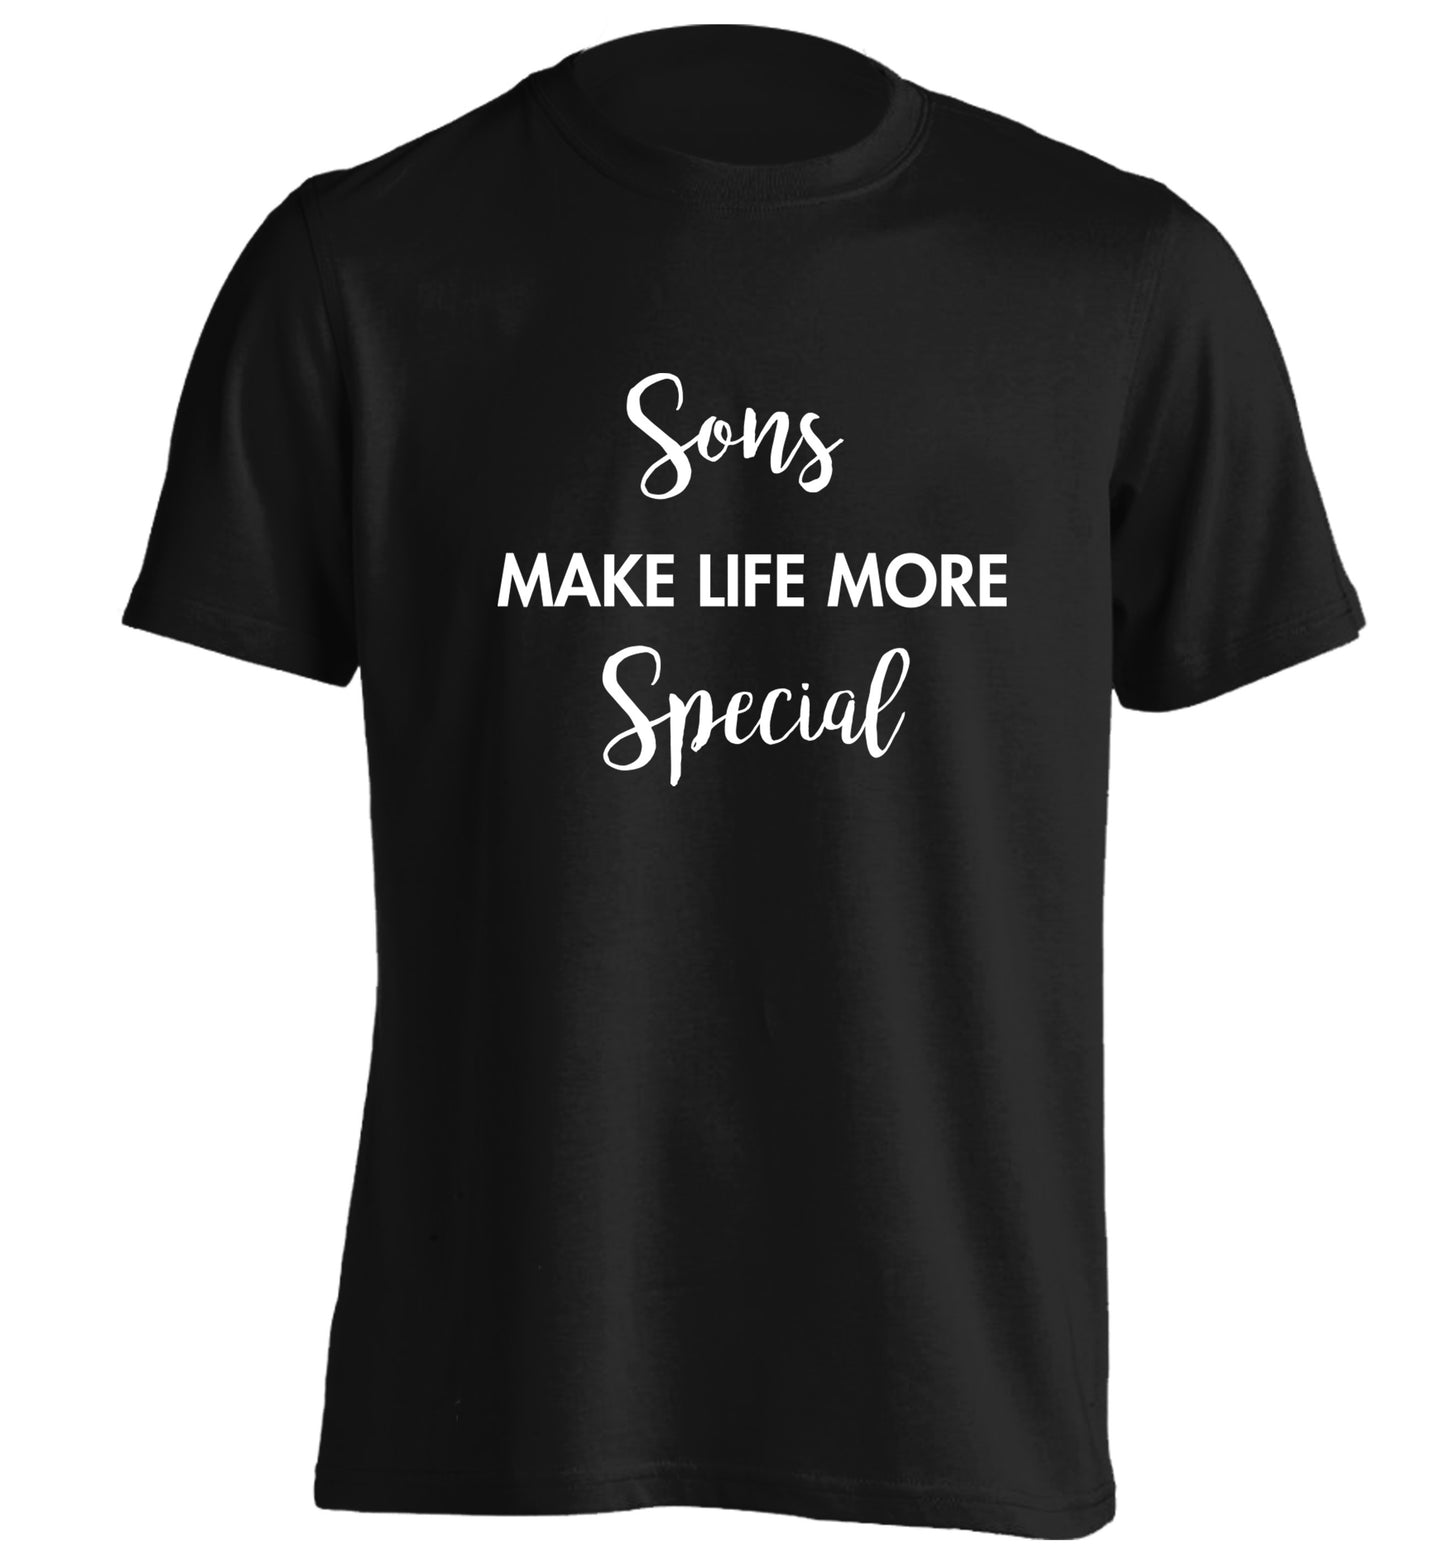 Sons make life more special adults unisex black Tshirt 2XL